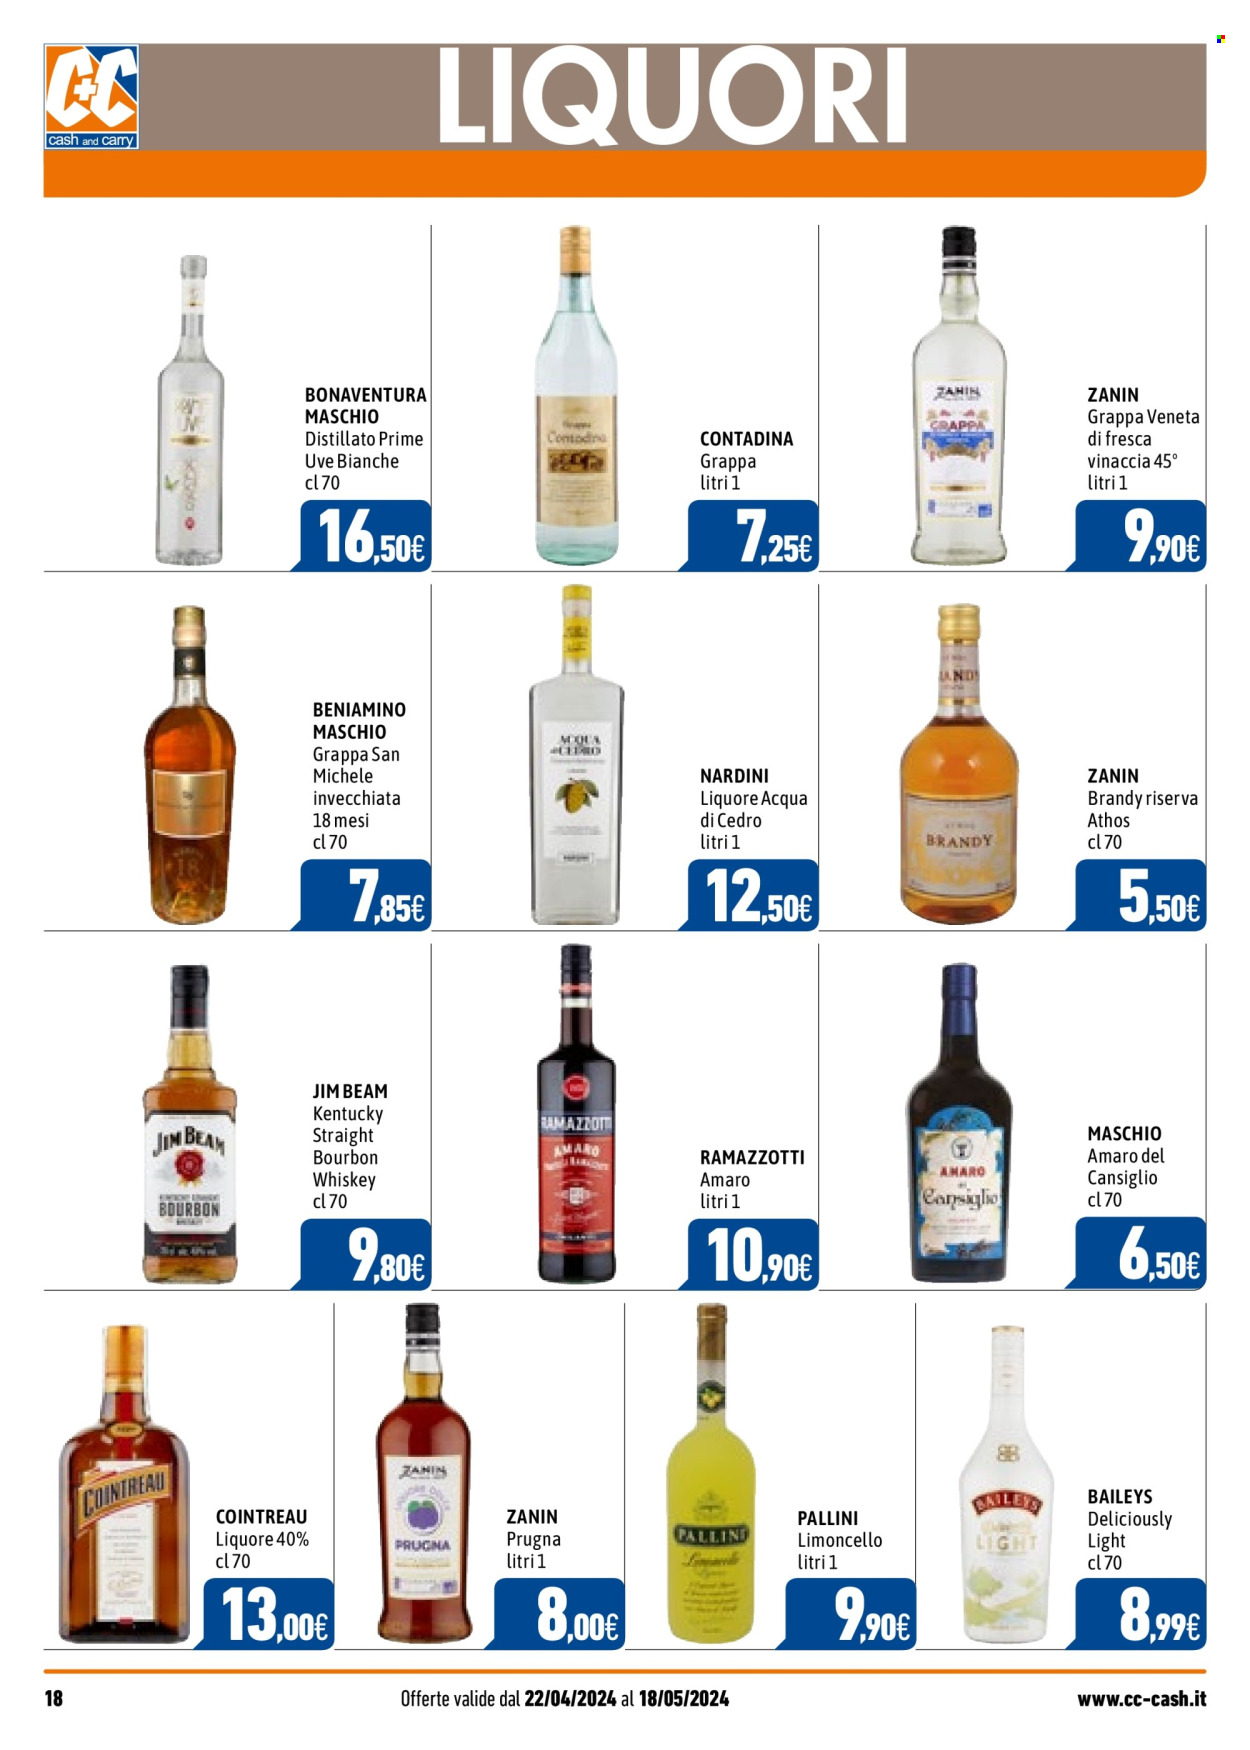 thumbnail - Volantino C+C Cash & Carry - 22/4/2024 - 18/5/2024 - Prodotti in offerta - bevanda alcolica, Baileys, brandy, Cointreau, whiskey, Limoncello, liquore, Jim Beam, grappa, bourbon whiskey, Ramazzotti. Pagina 18.